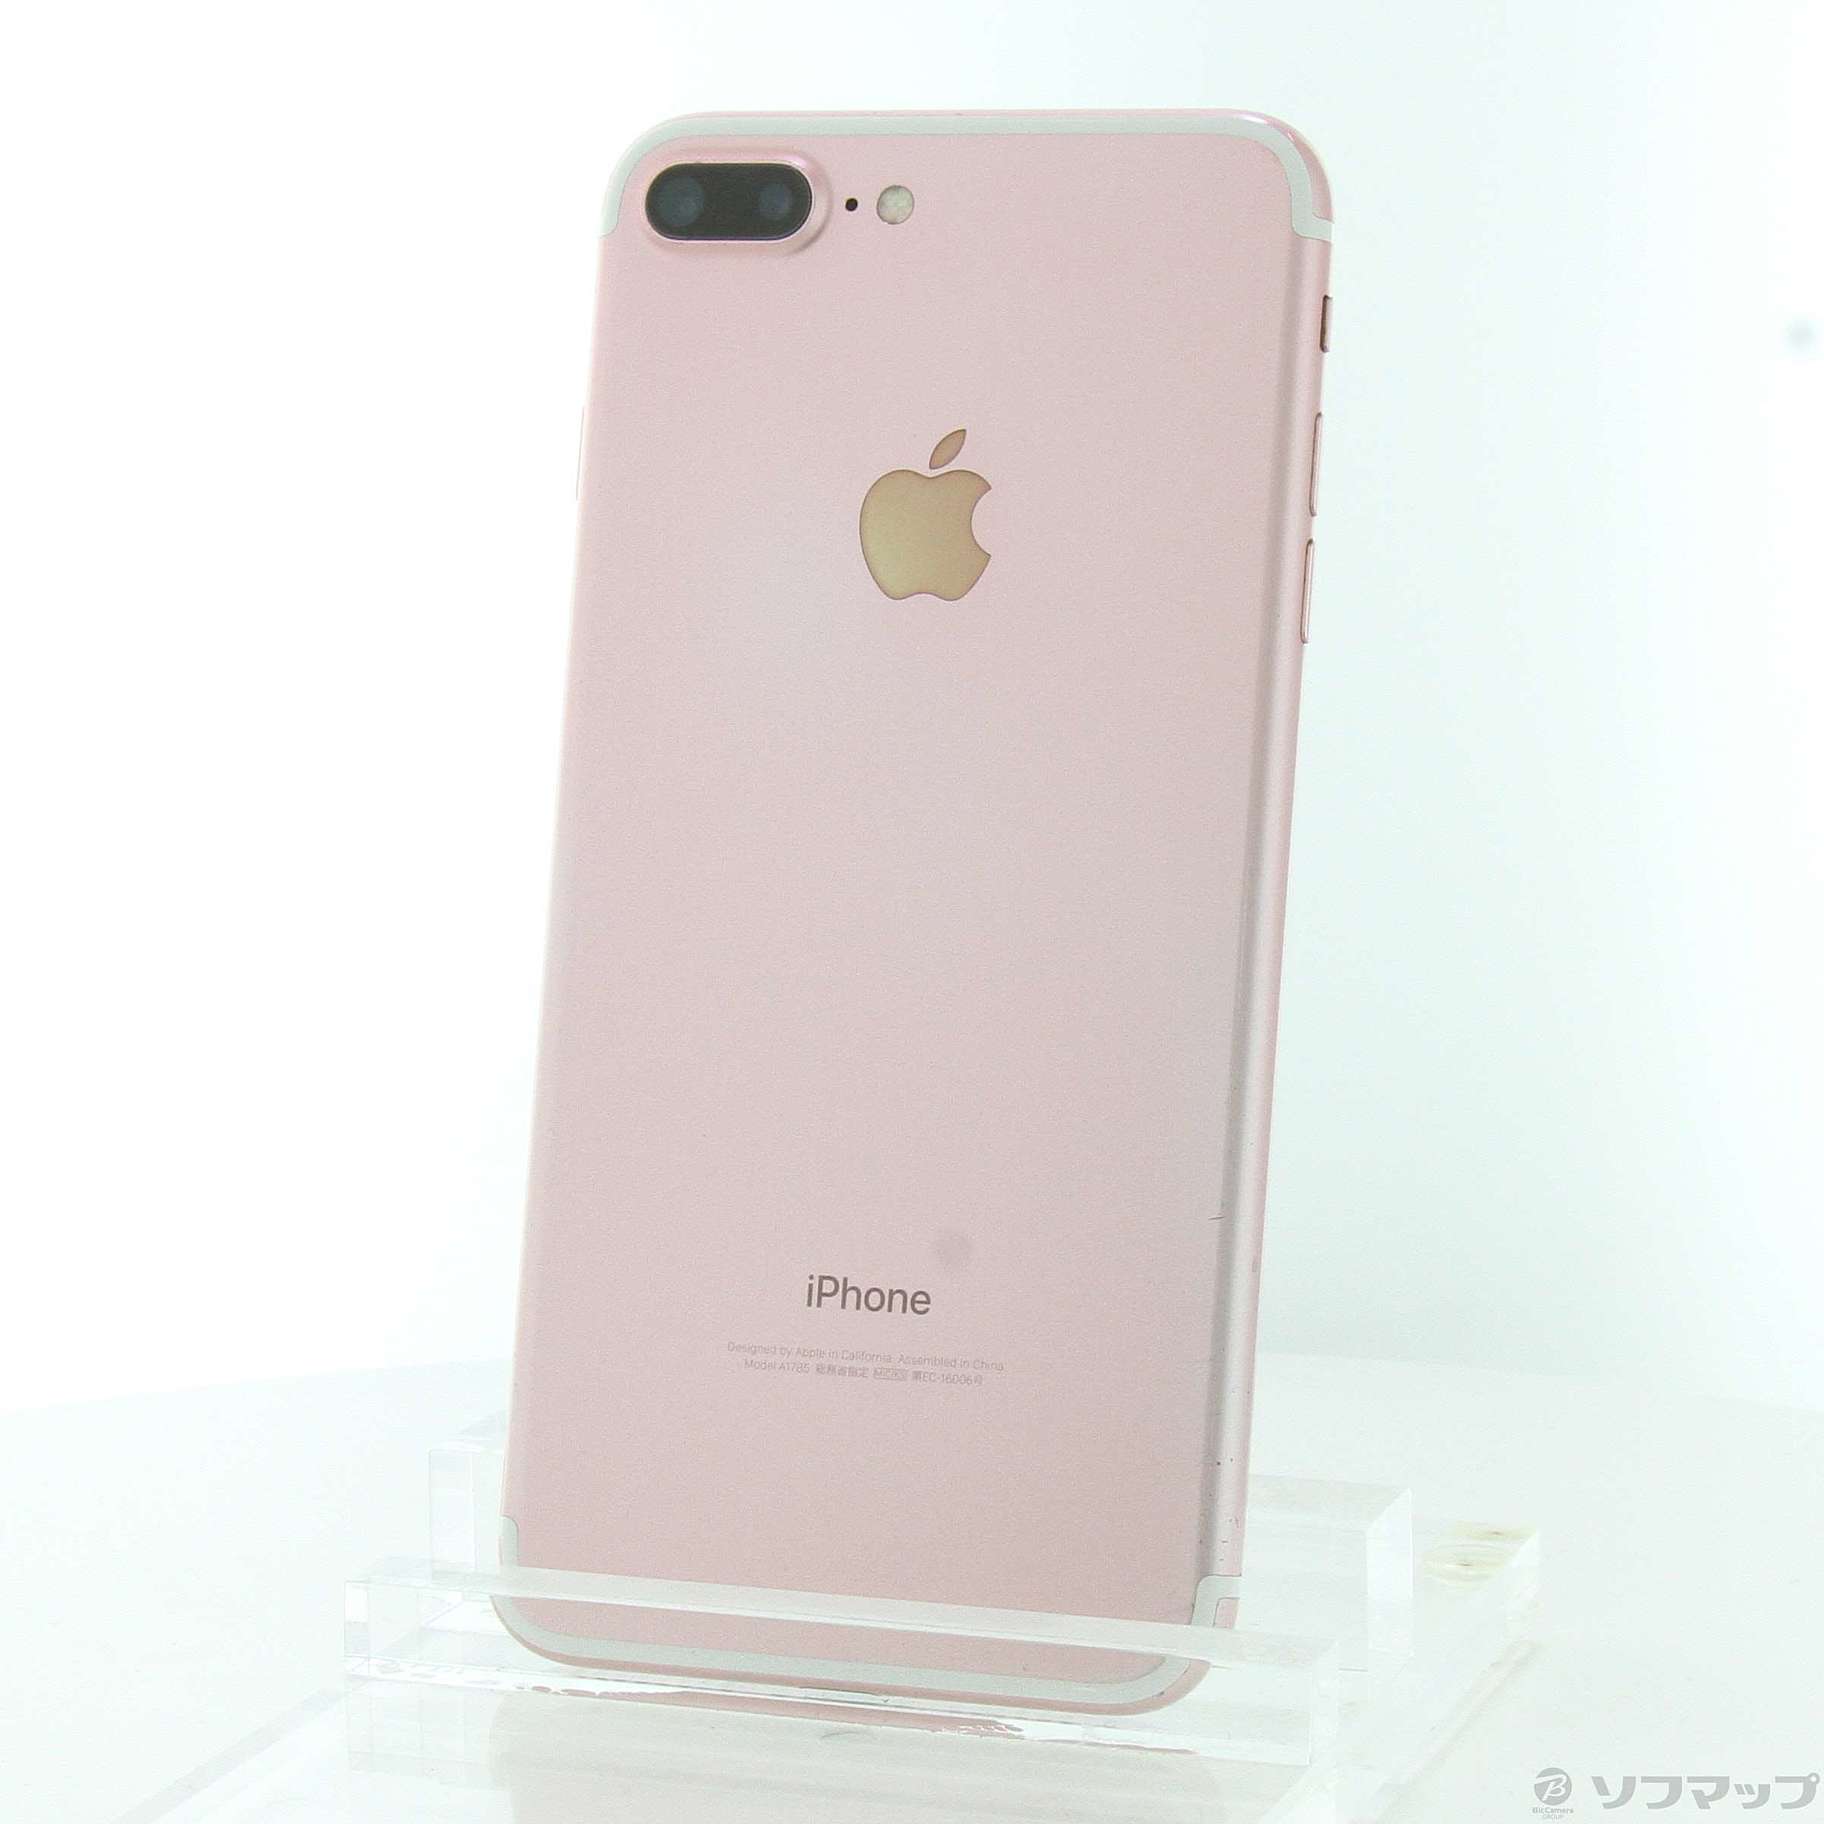 iPhone 7 Plus Gold 256 GB Softbank